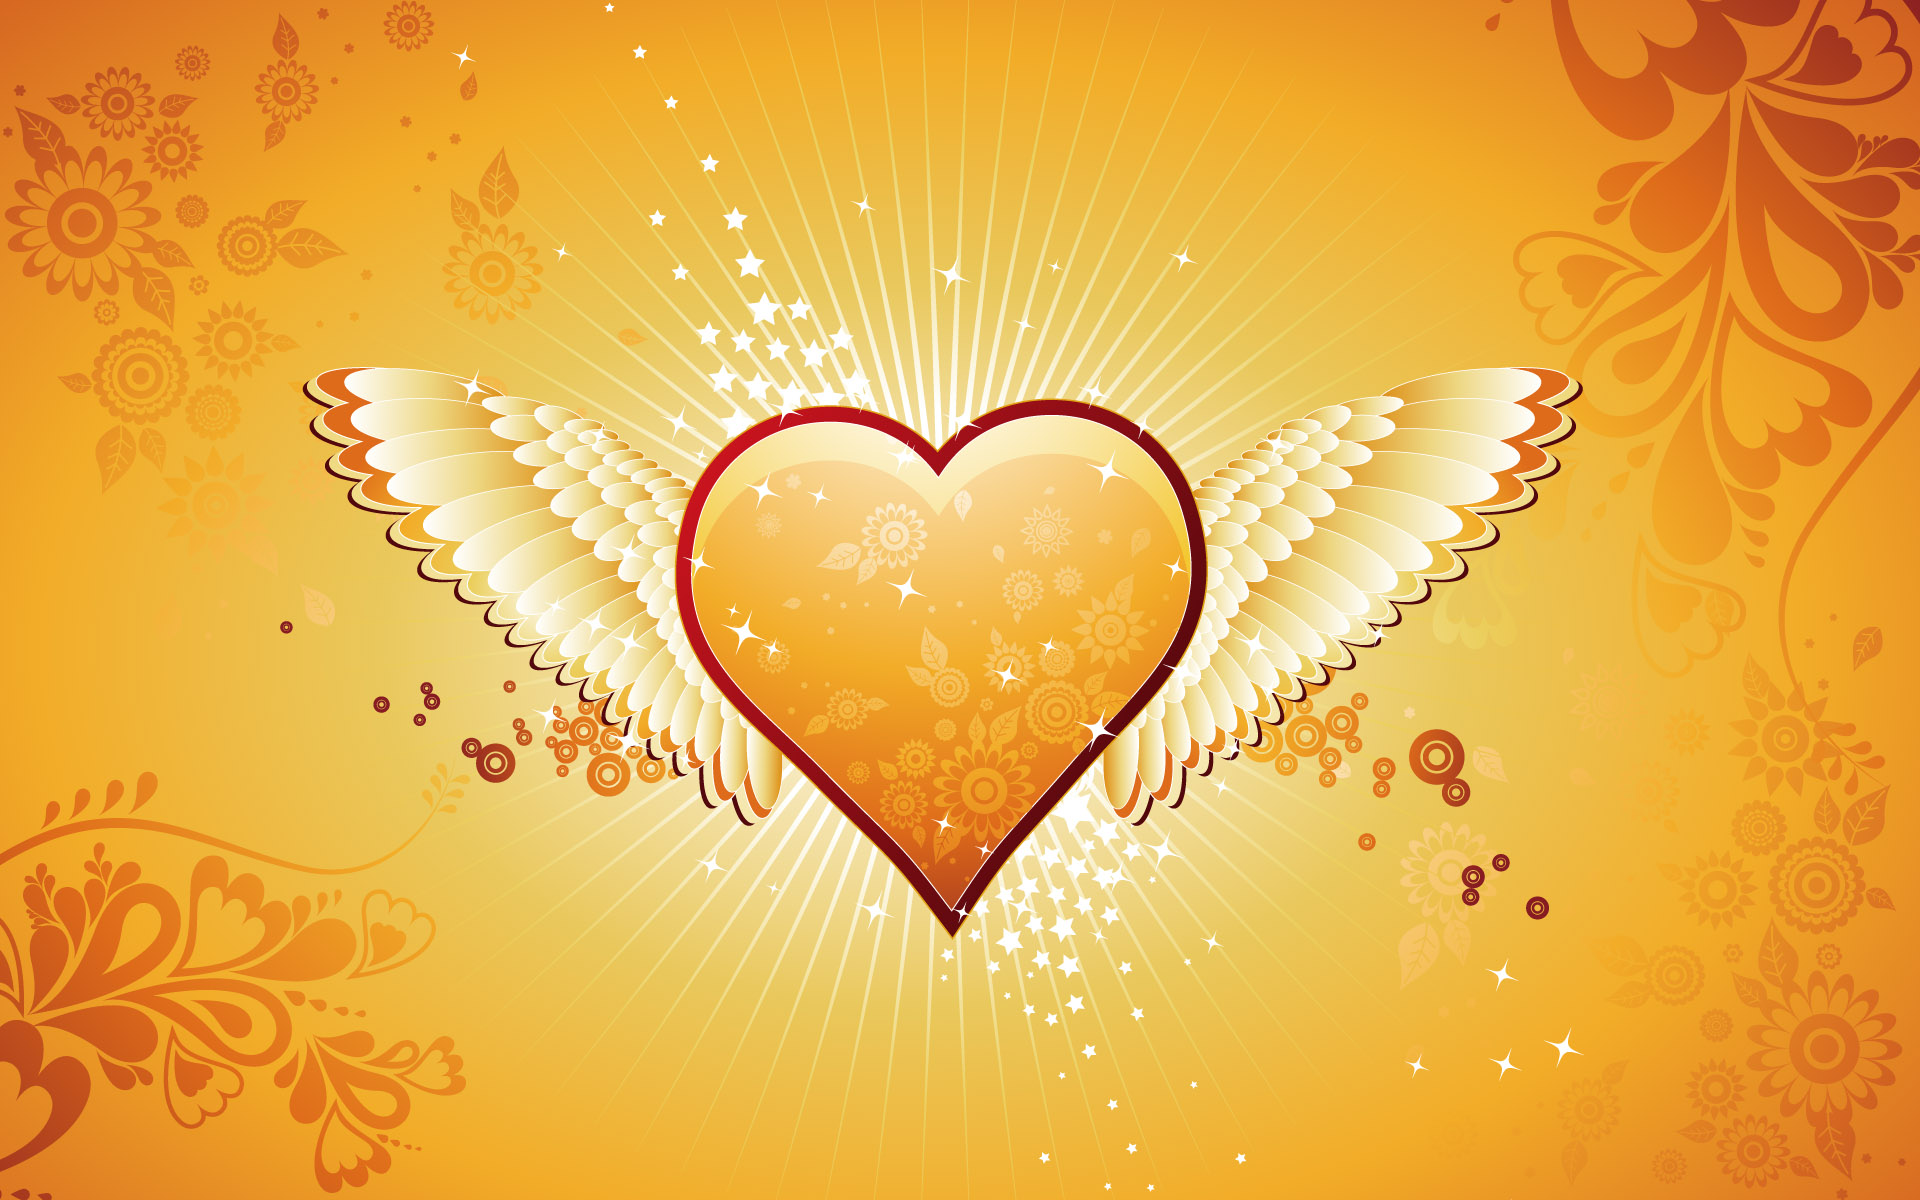 Heart Angel Desktop Pc And Mac Wallpaper